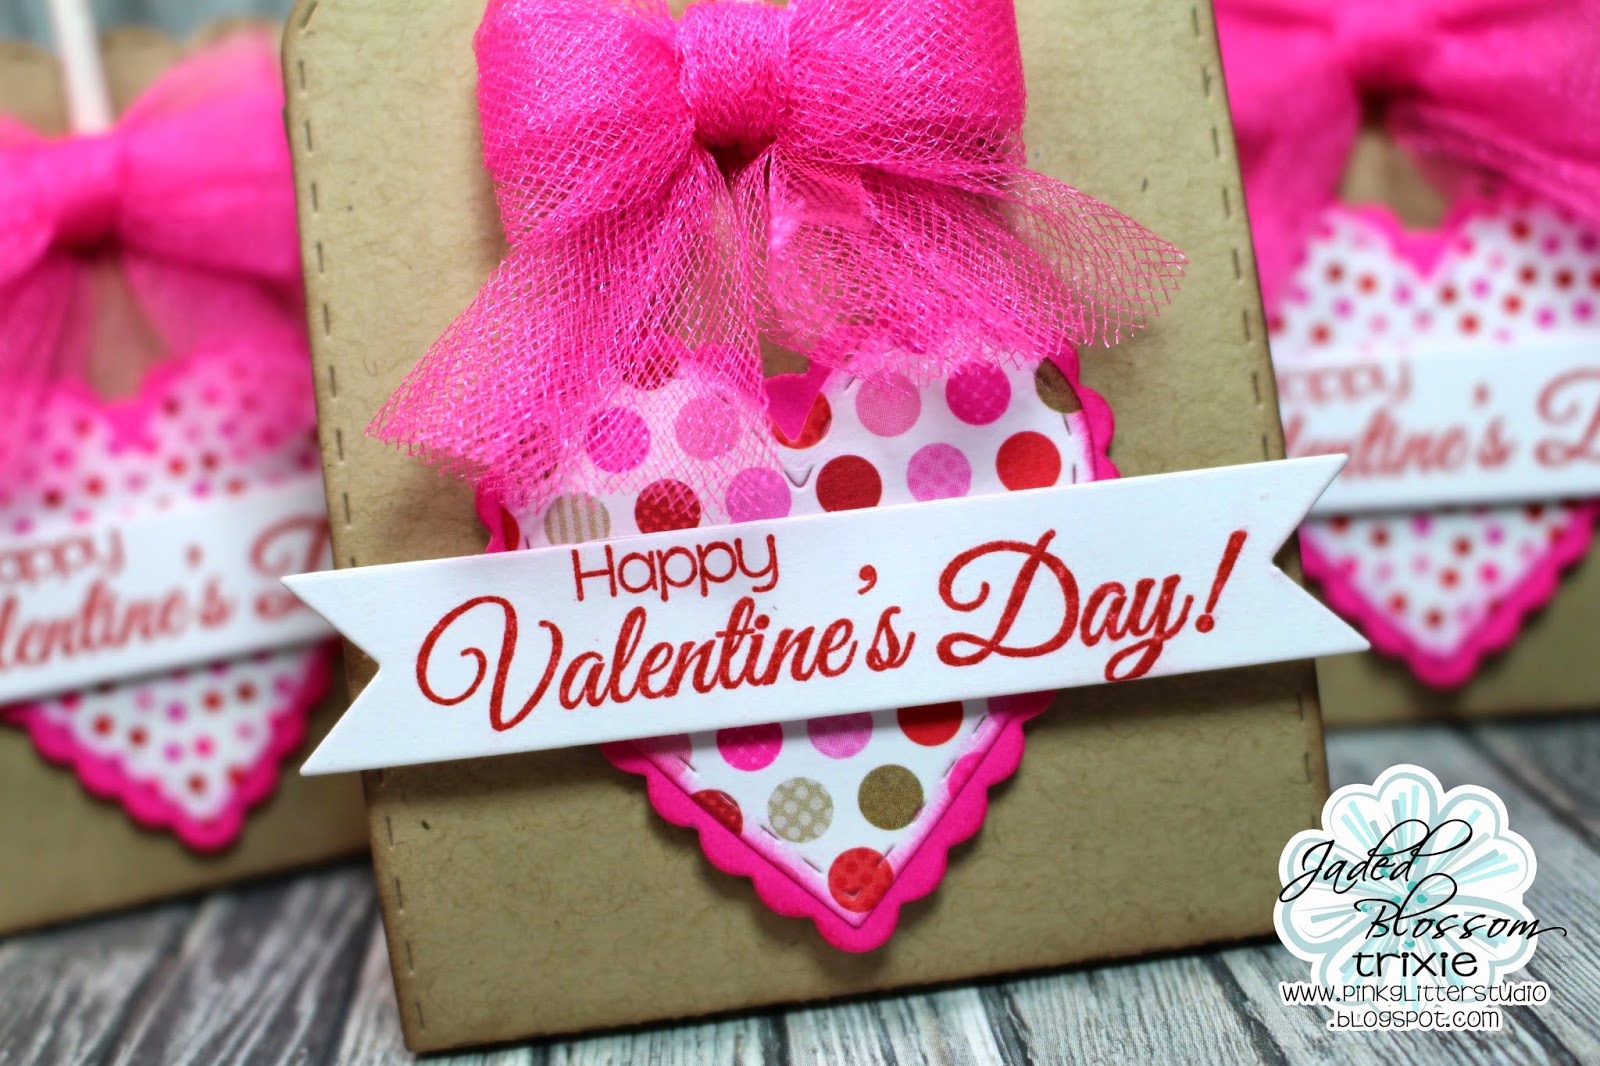 Pink Glitter Studio: Happy Valentine's Day